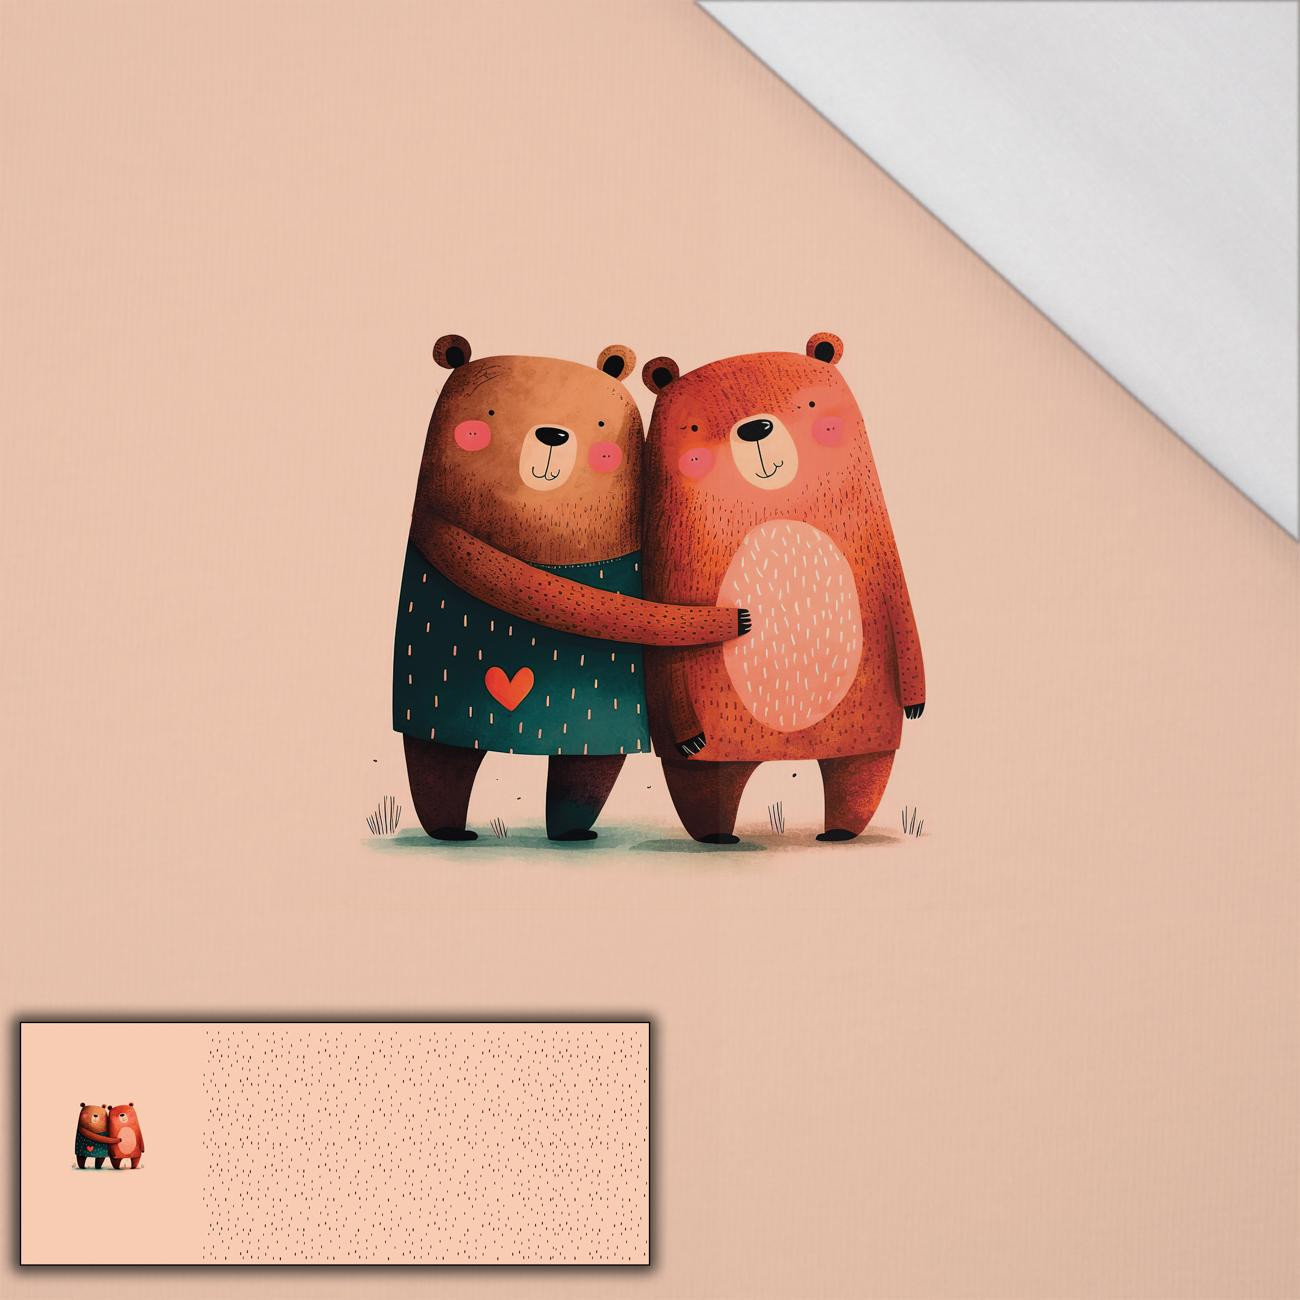 BEARS IN LOVE 1 - SINGLE JERSEY PANORAMIC PANEL (60cm x 155cm)